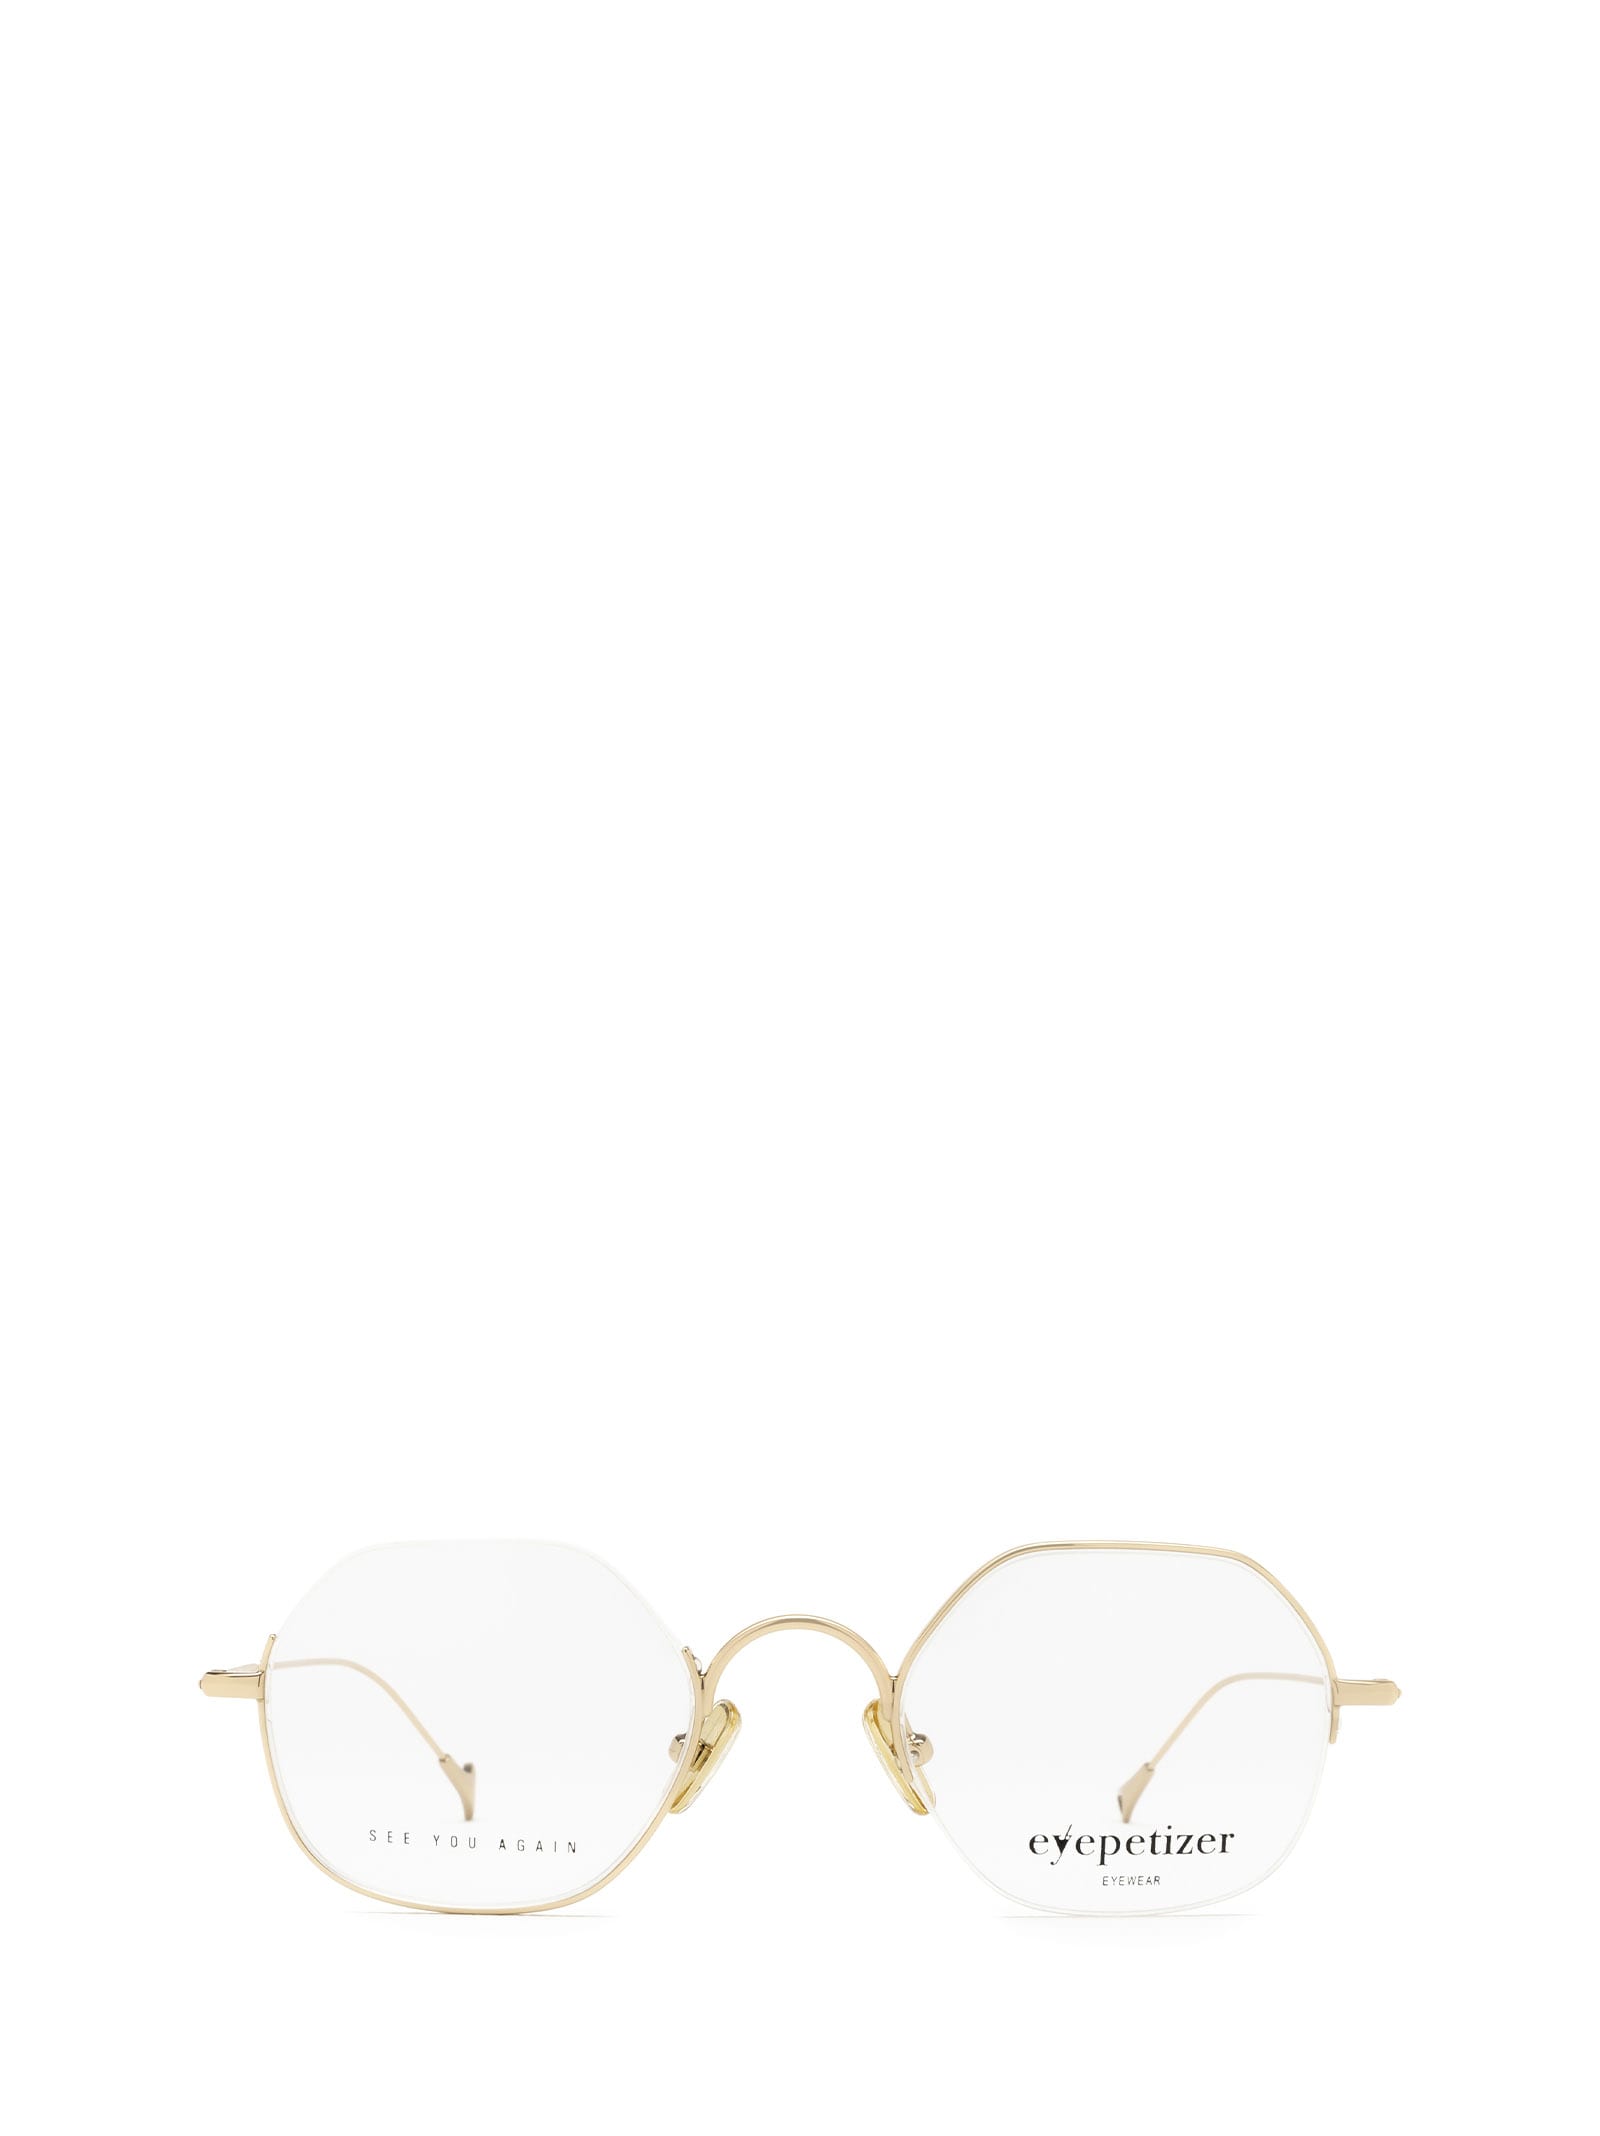 Shop Eyepetizer Ottagono Rose Gold Glasses